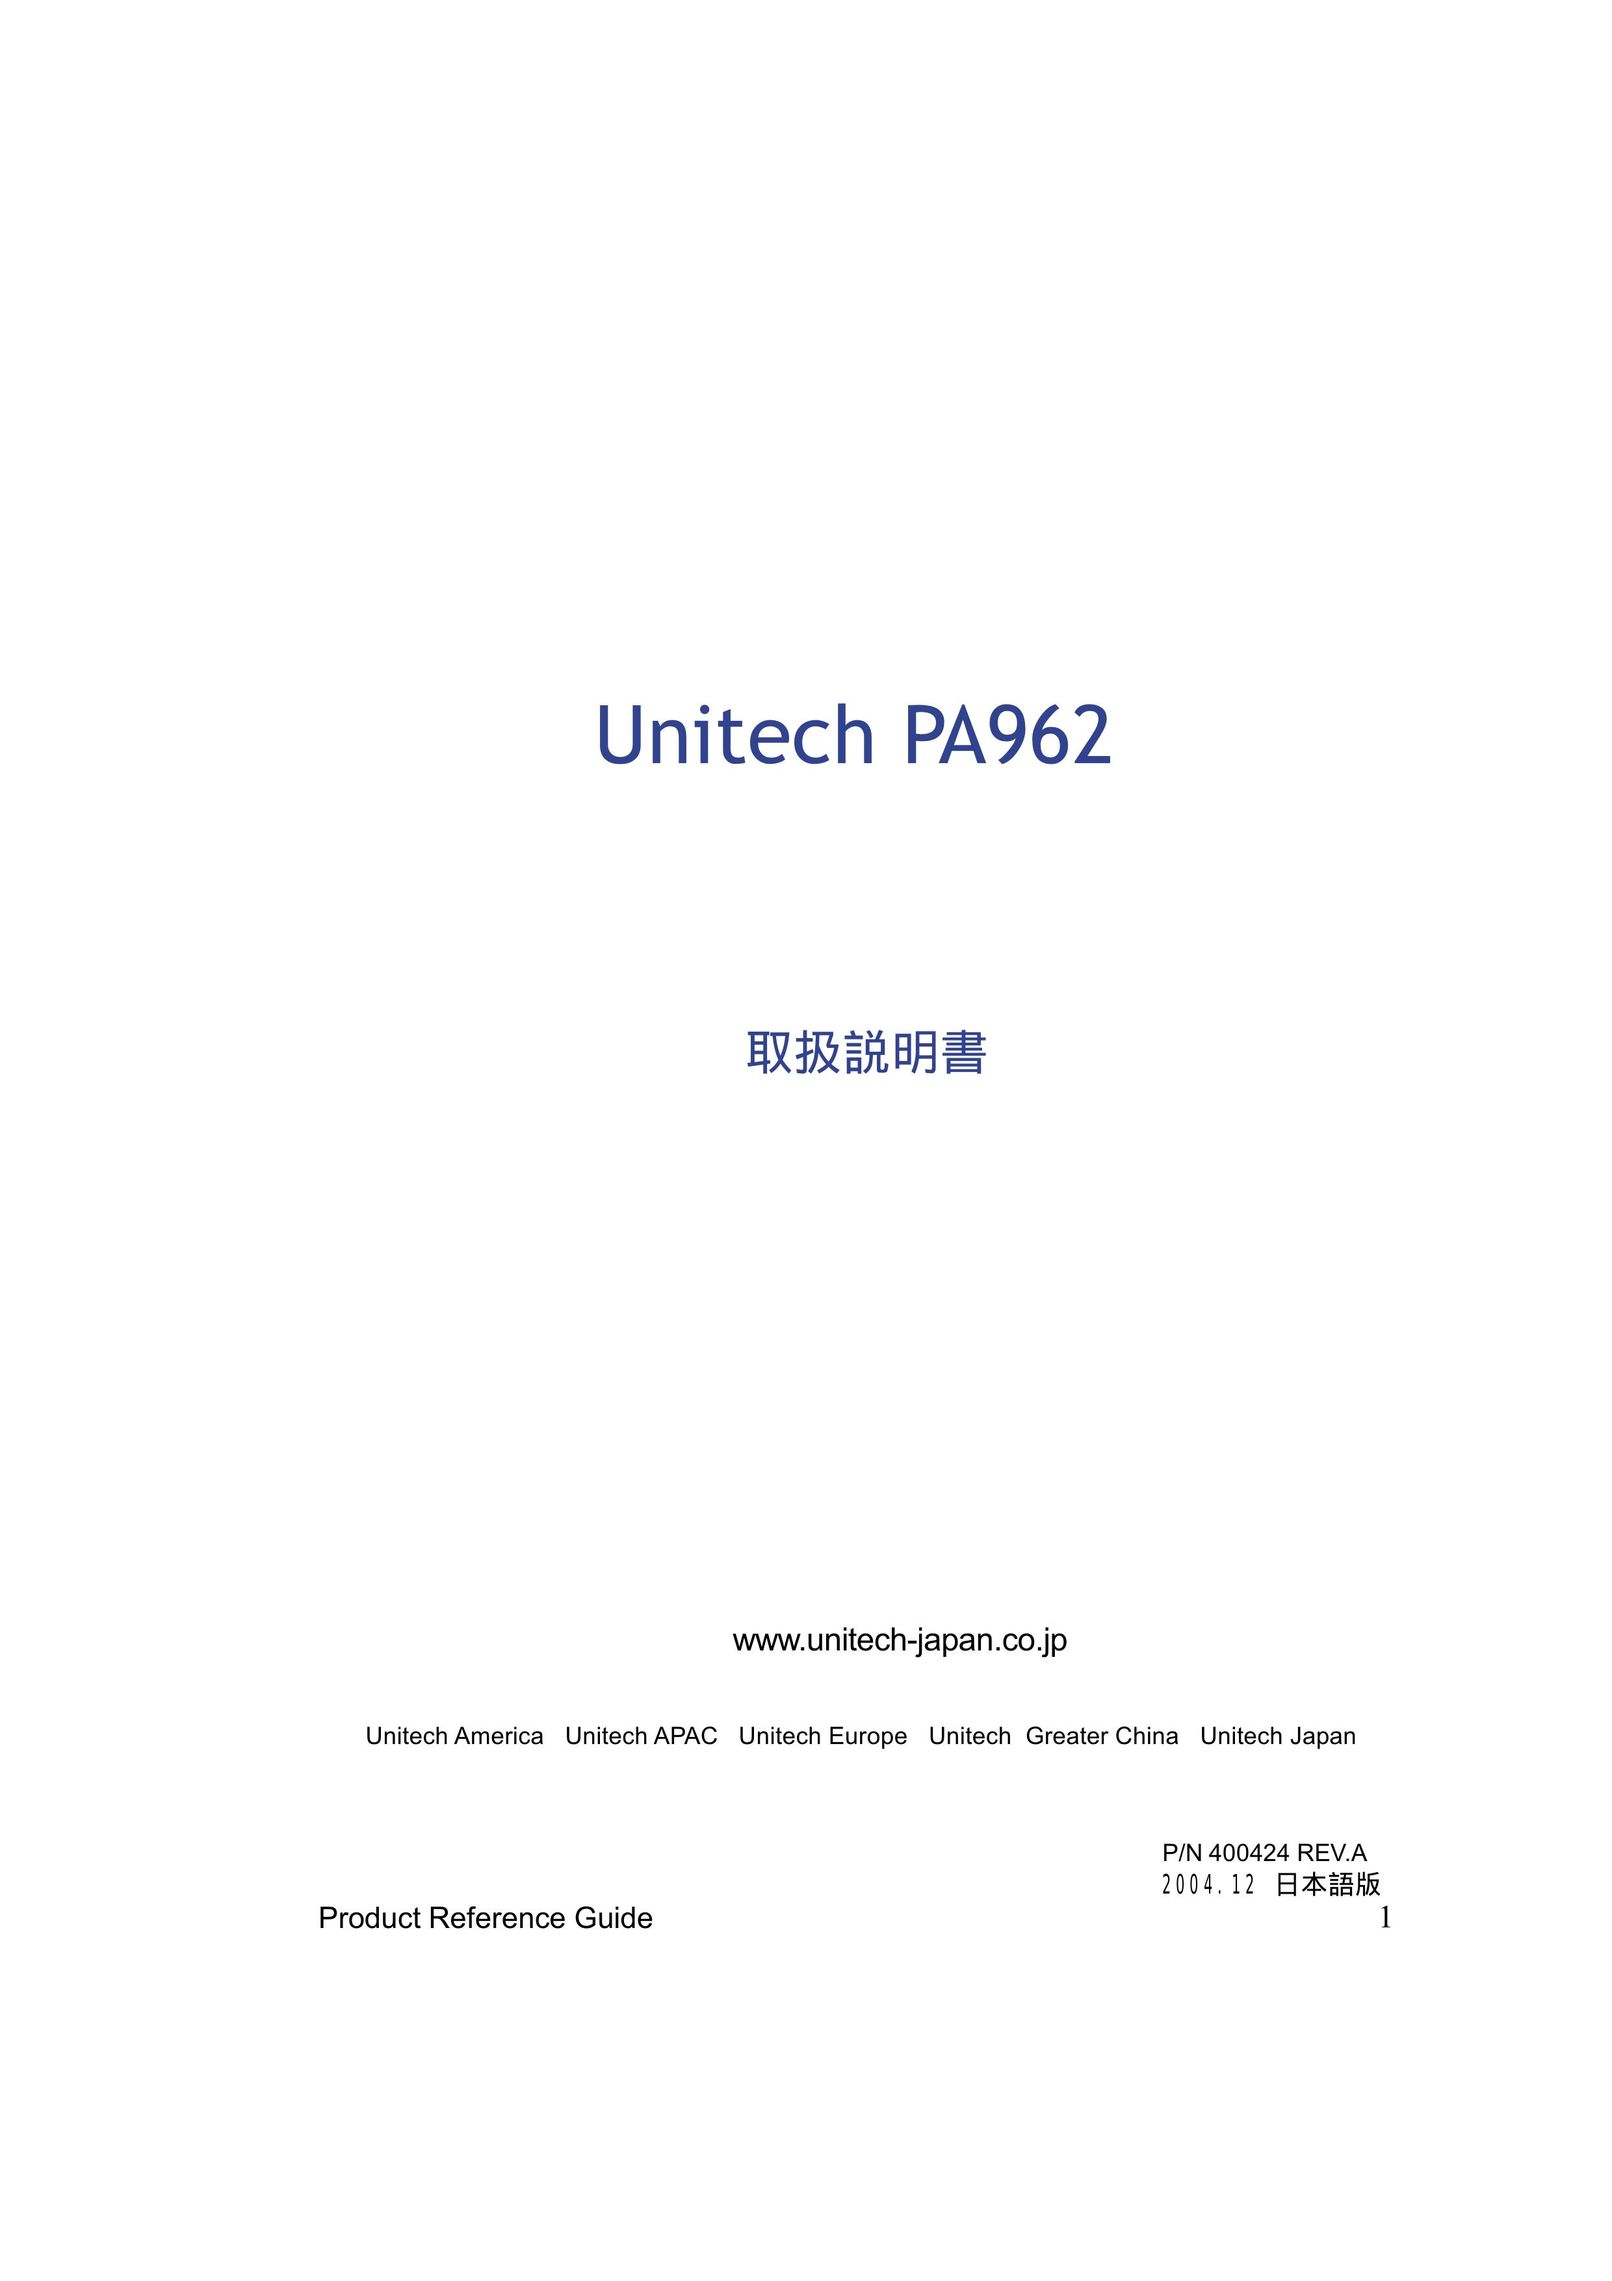 Unitech PA962 Cell Phone User Manual